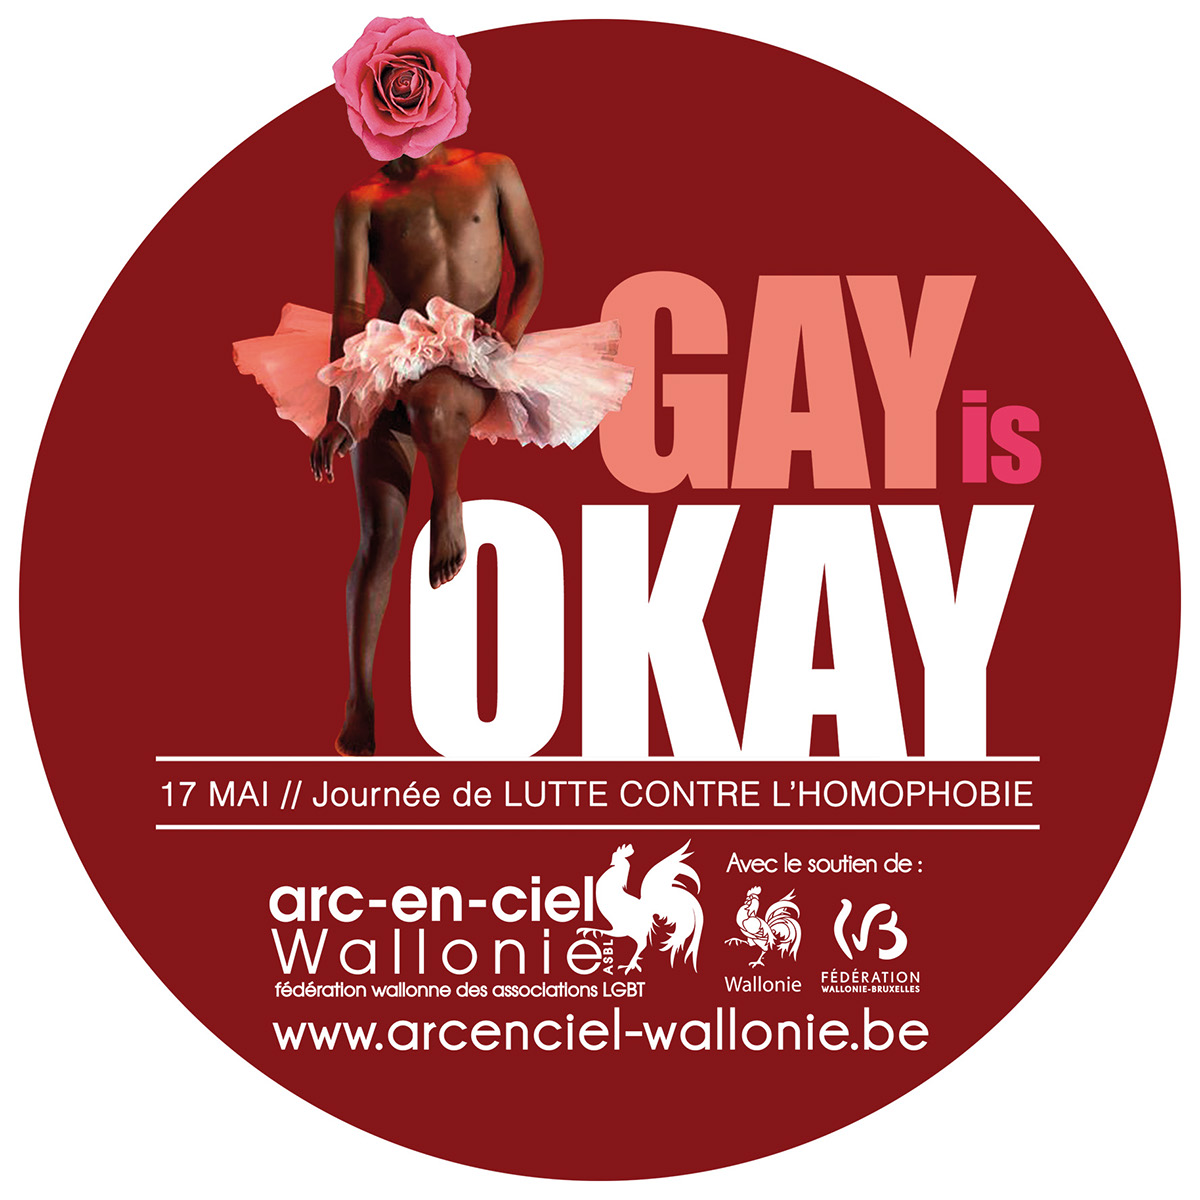 LGBT LGBT RIGHTS campaign belgium liège collage collage art ANGIE PIR  Digital Art  Trump